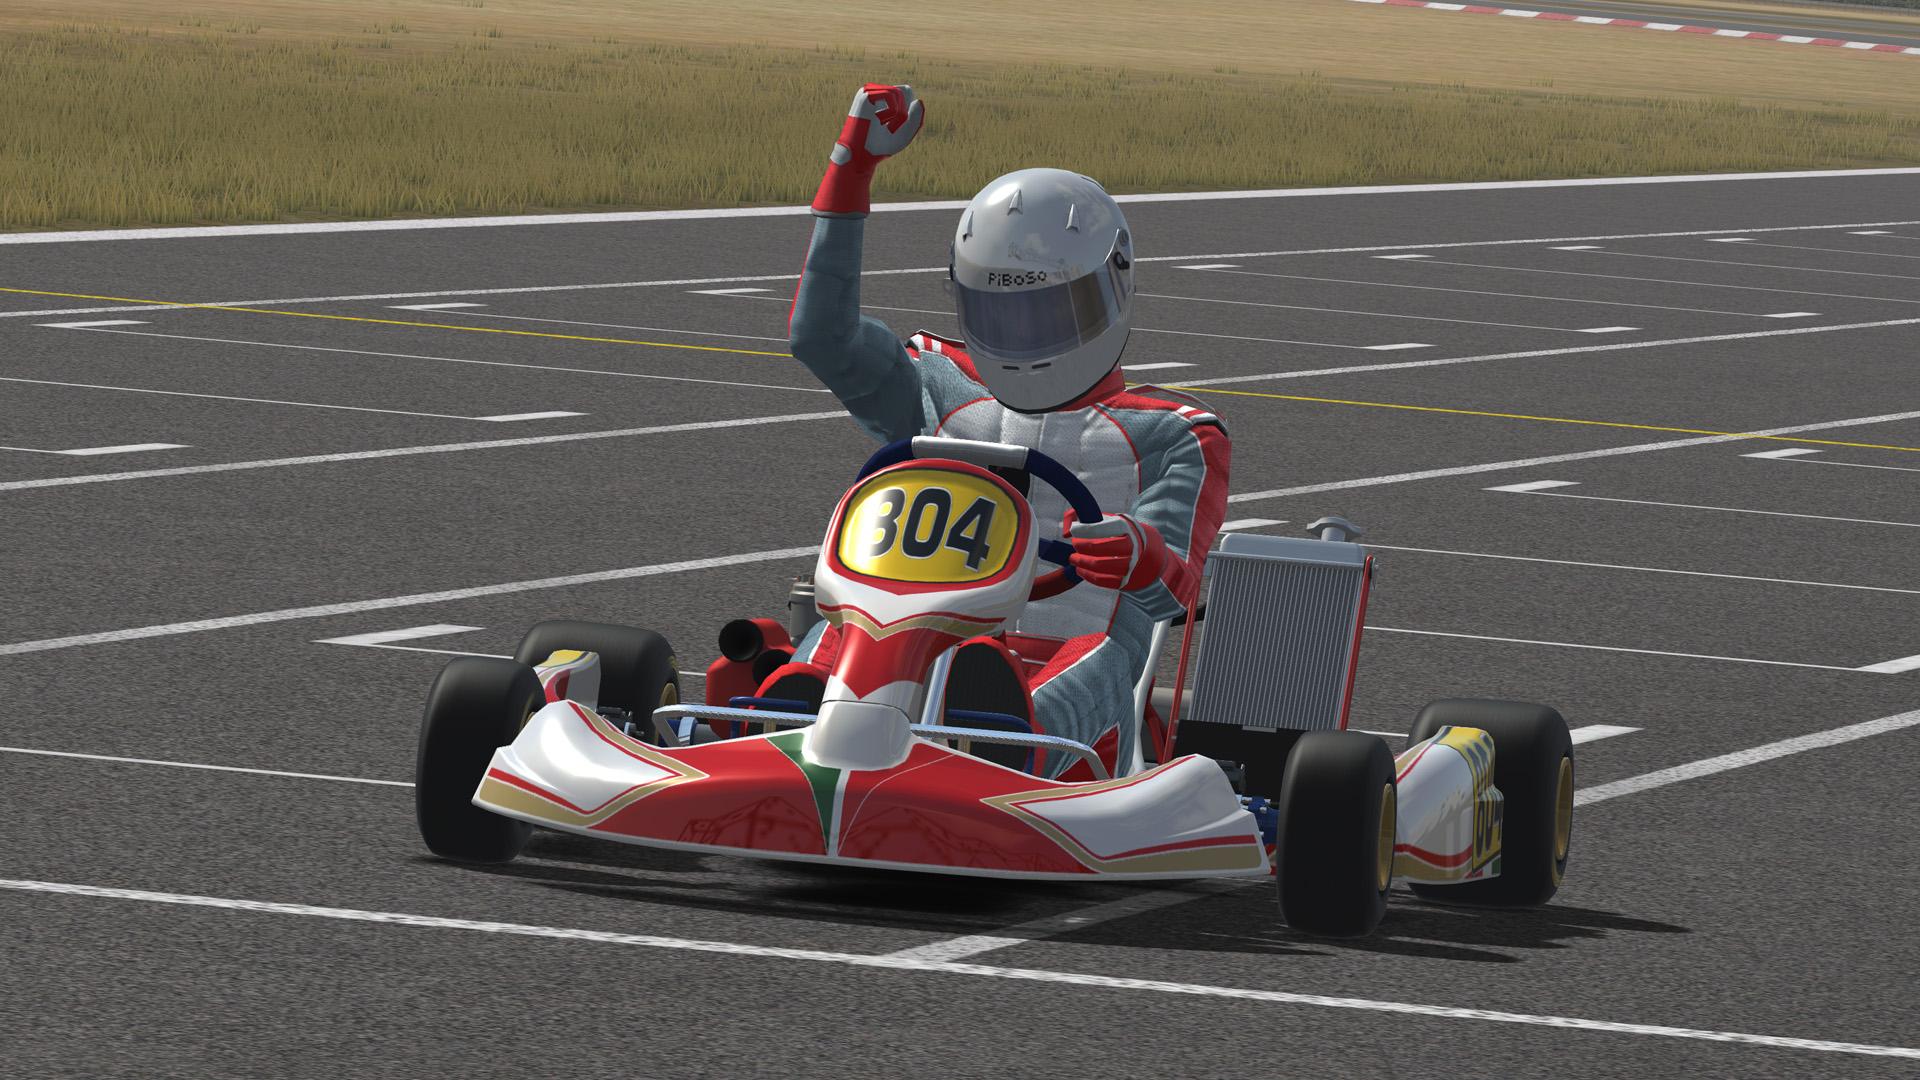 Screenshot №2 from game Kart Racing Pro